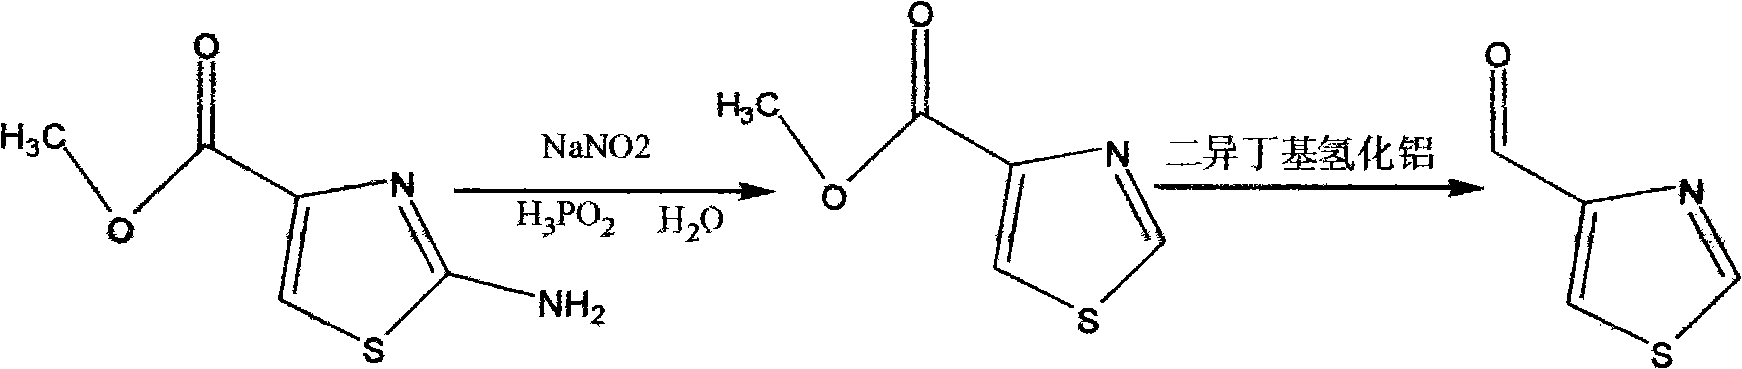 Synthesis method of thiazole-4-formaldehyde